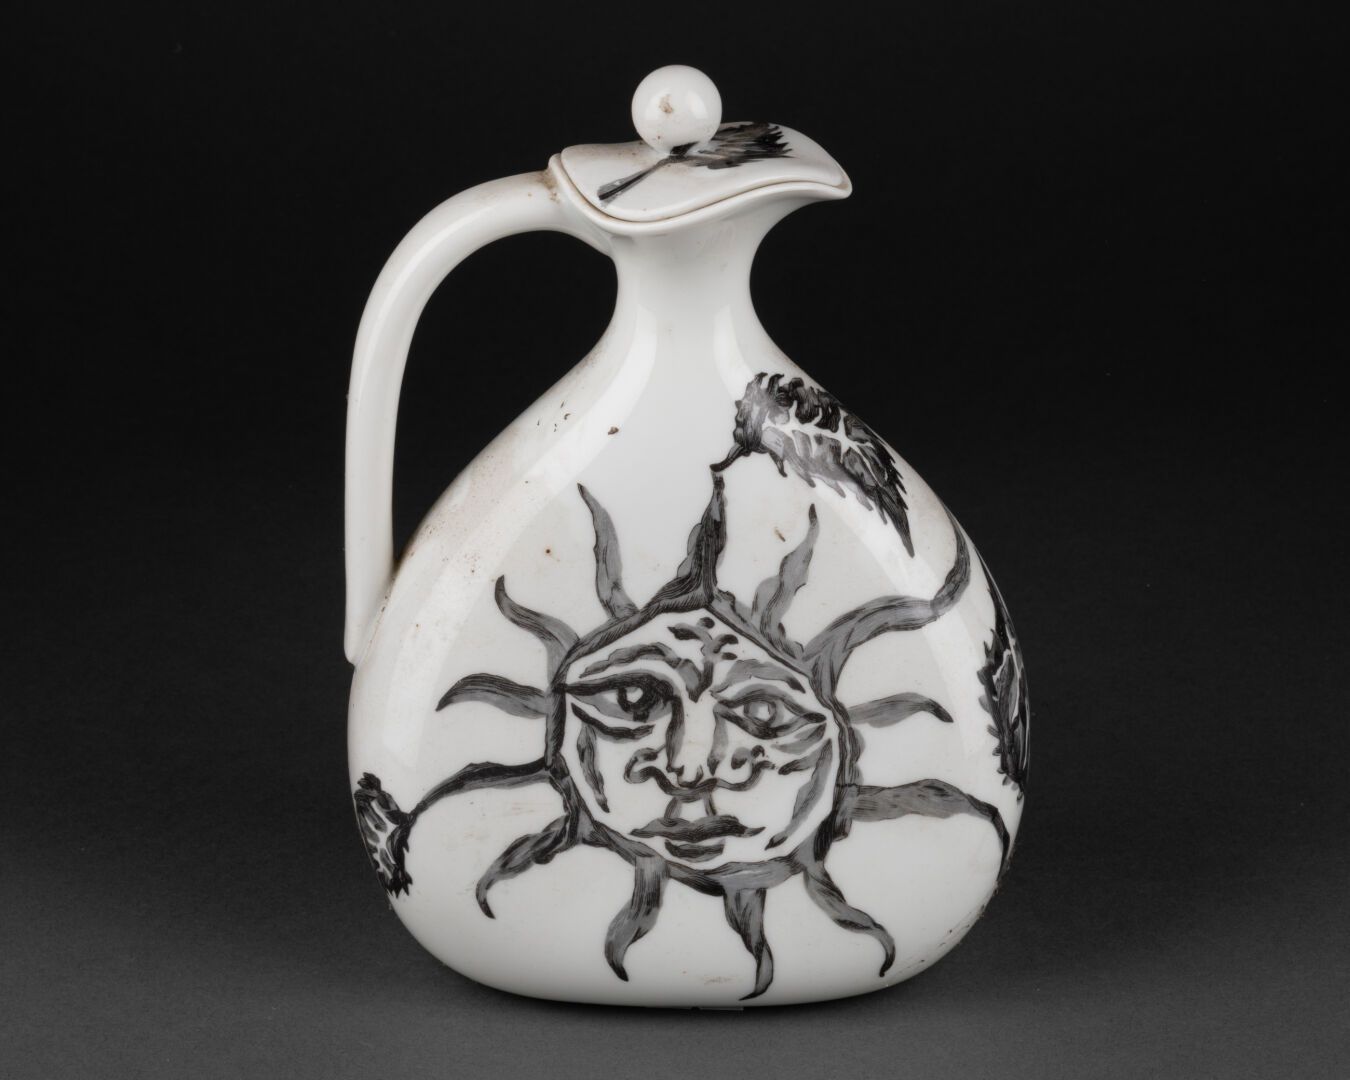 Jean LURÇAT (1892-1966) pour HAVILAND à Limoges 白底黑字的太阳的玻璃器皿

釉面陶瓷

签名

H.19,5厘米